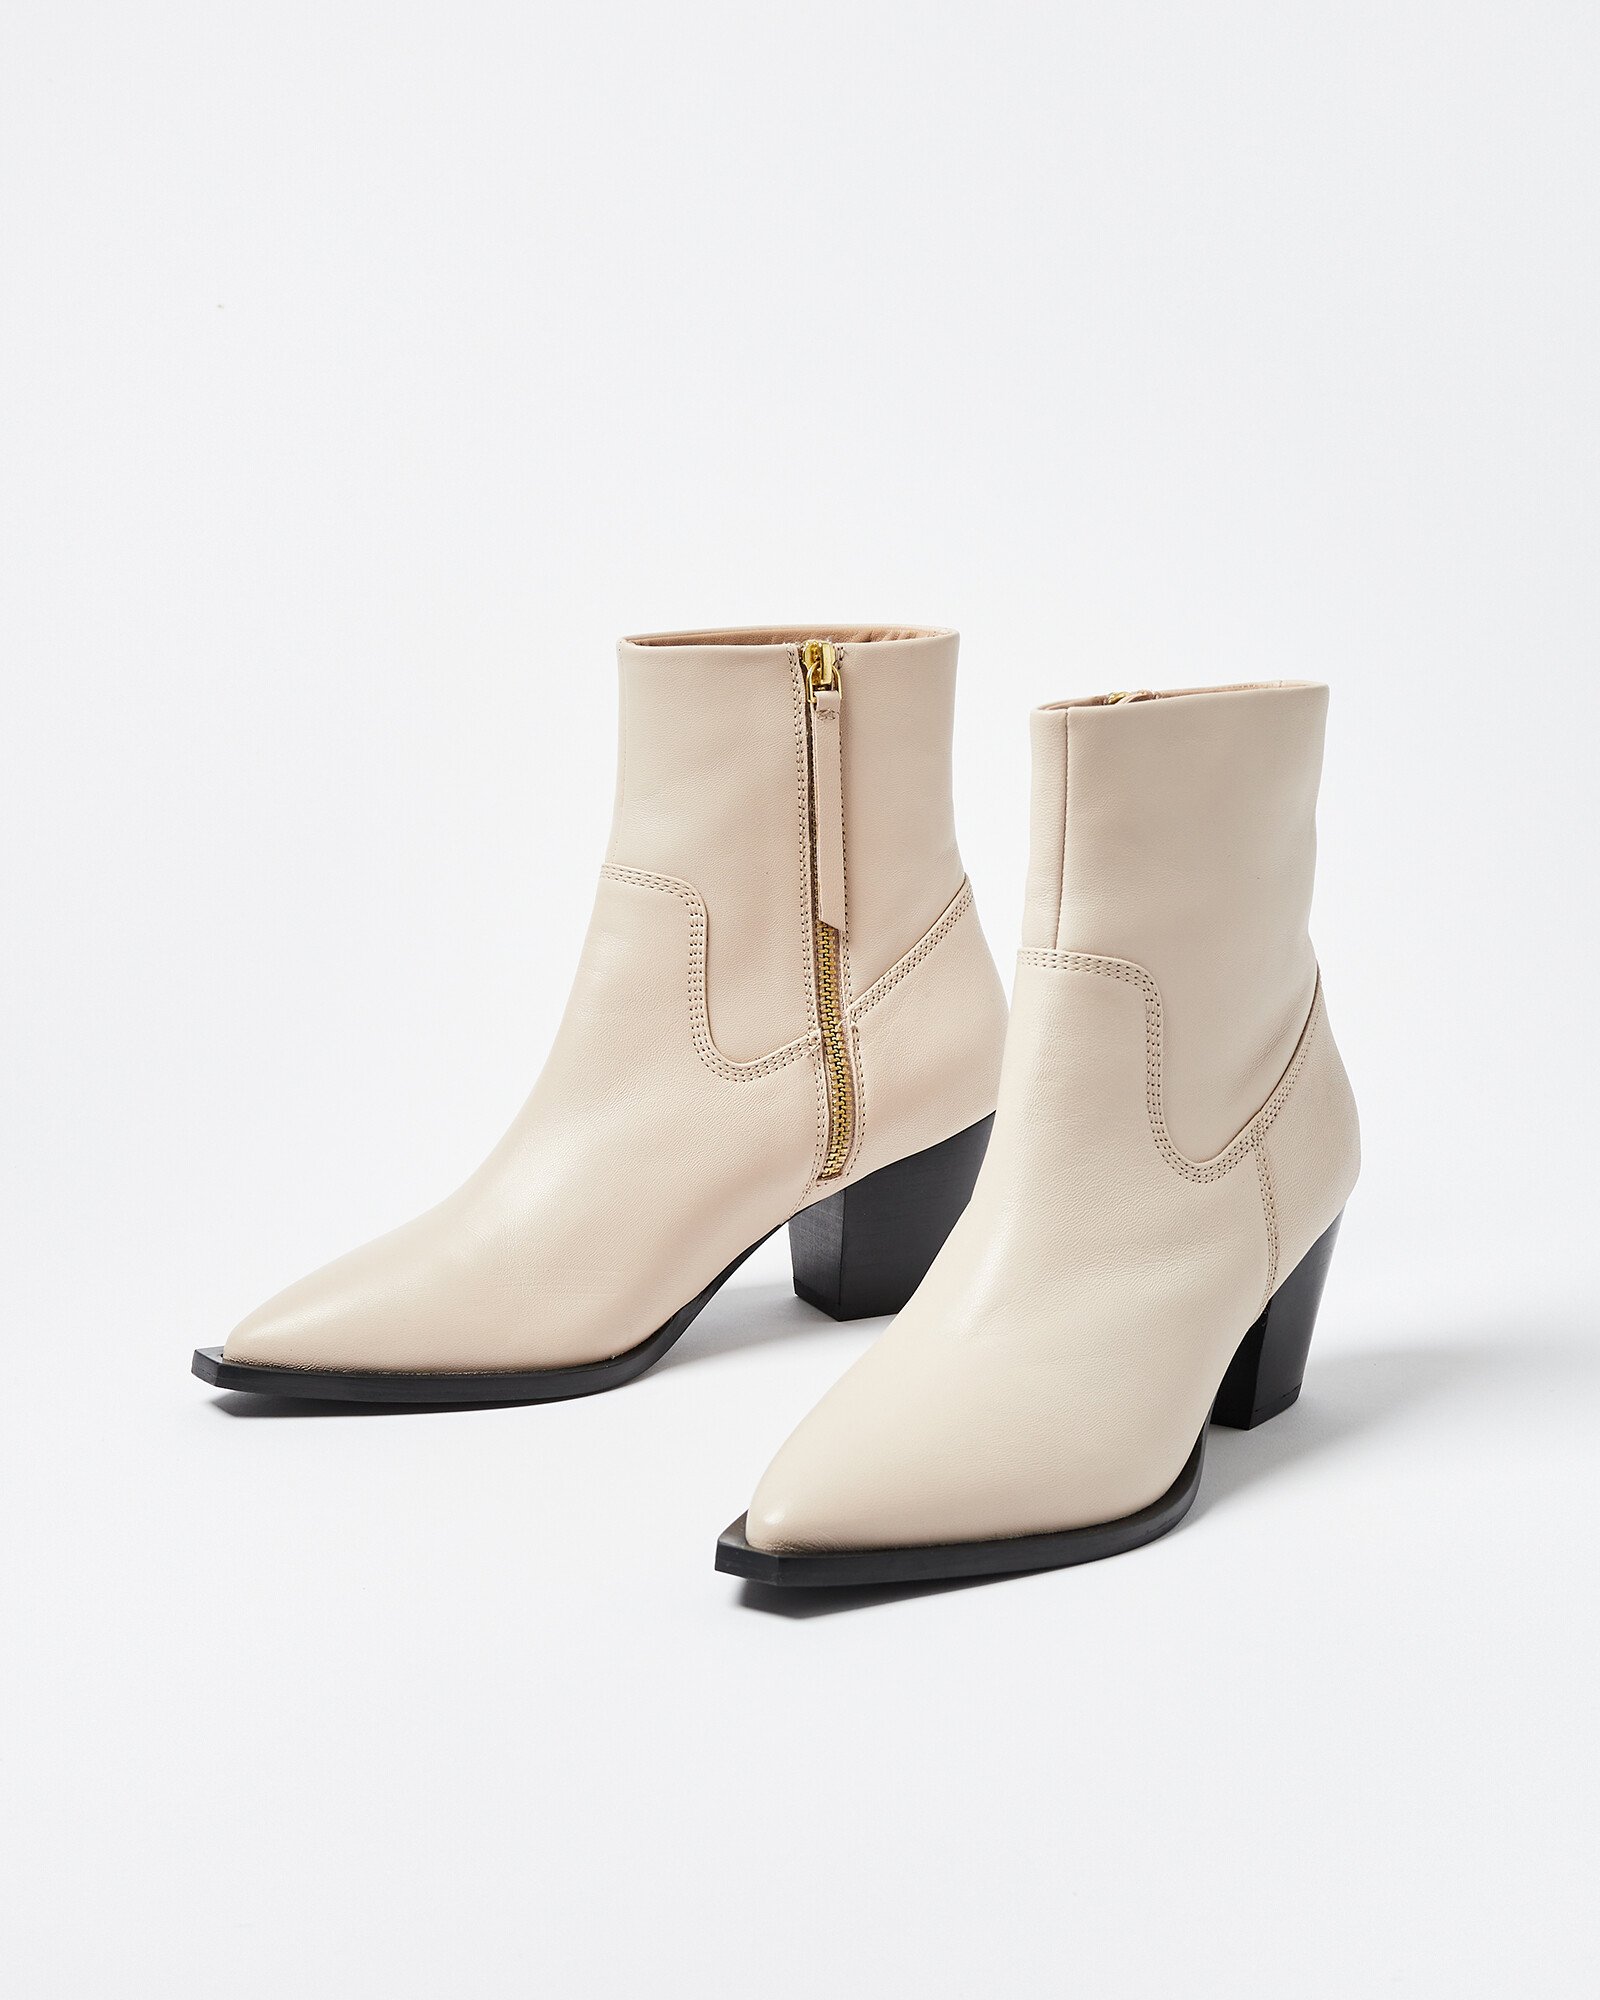 Oliver Bonas + Western Off White Leather Heeled Boots